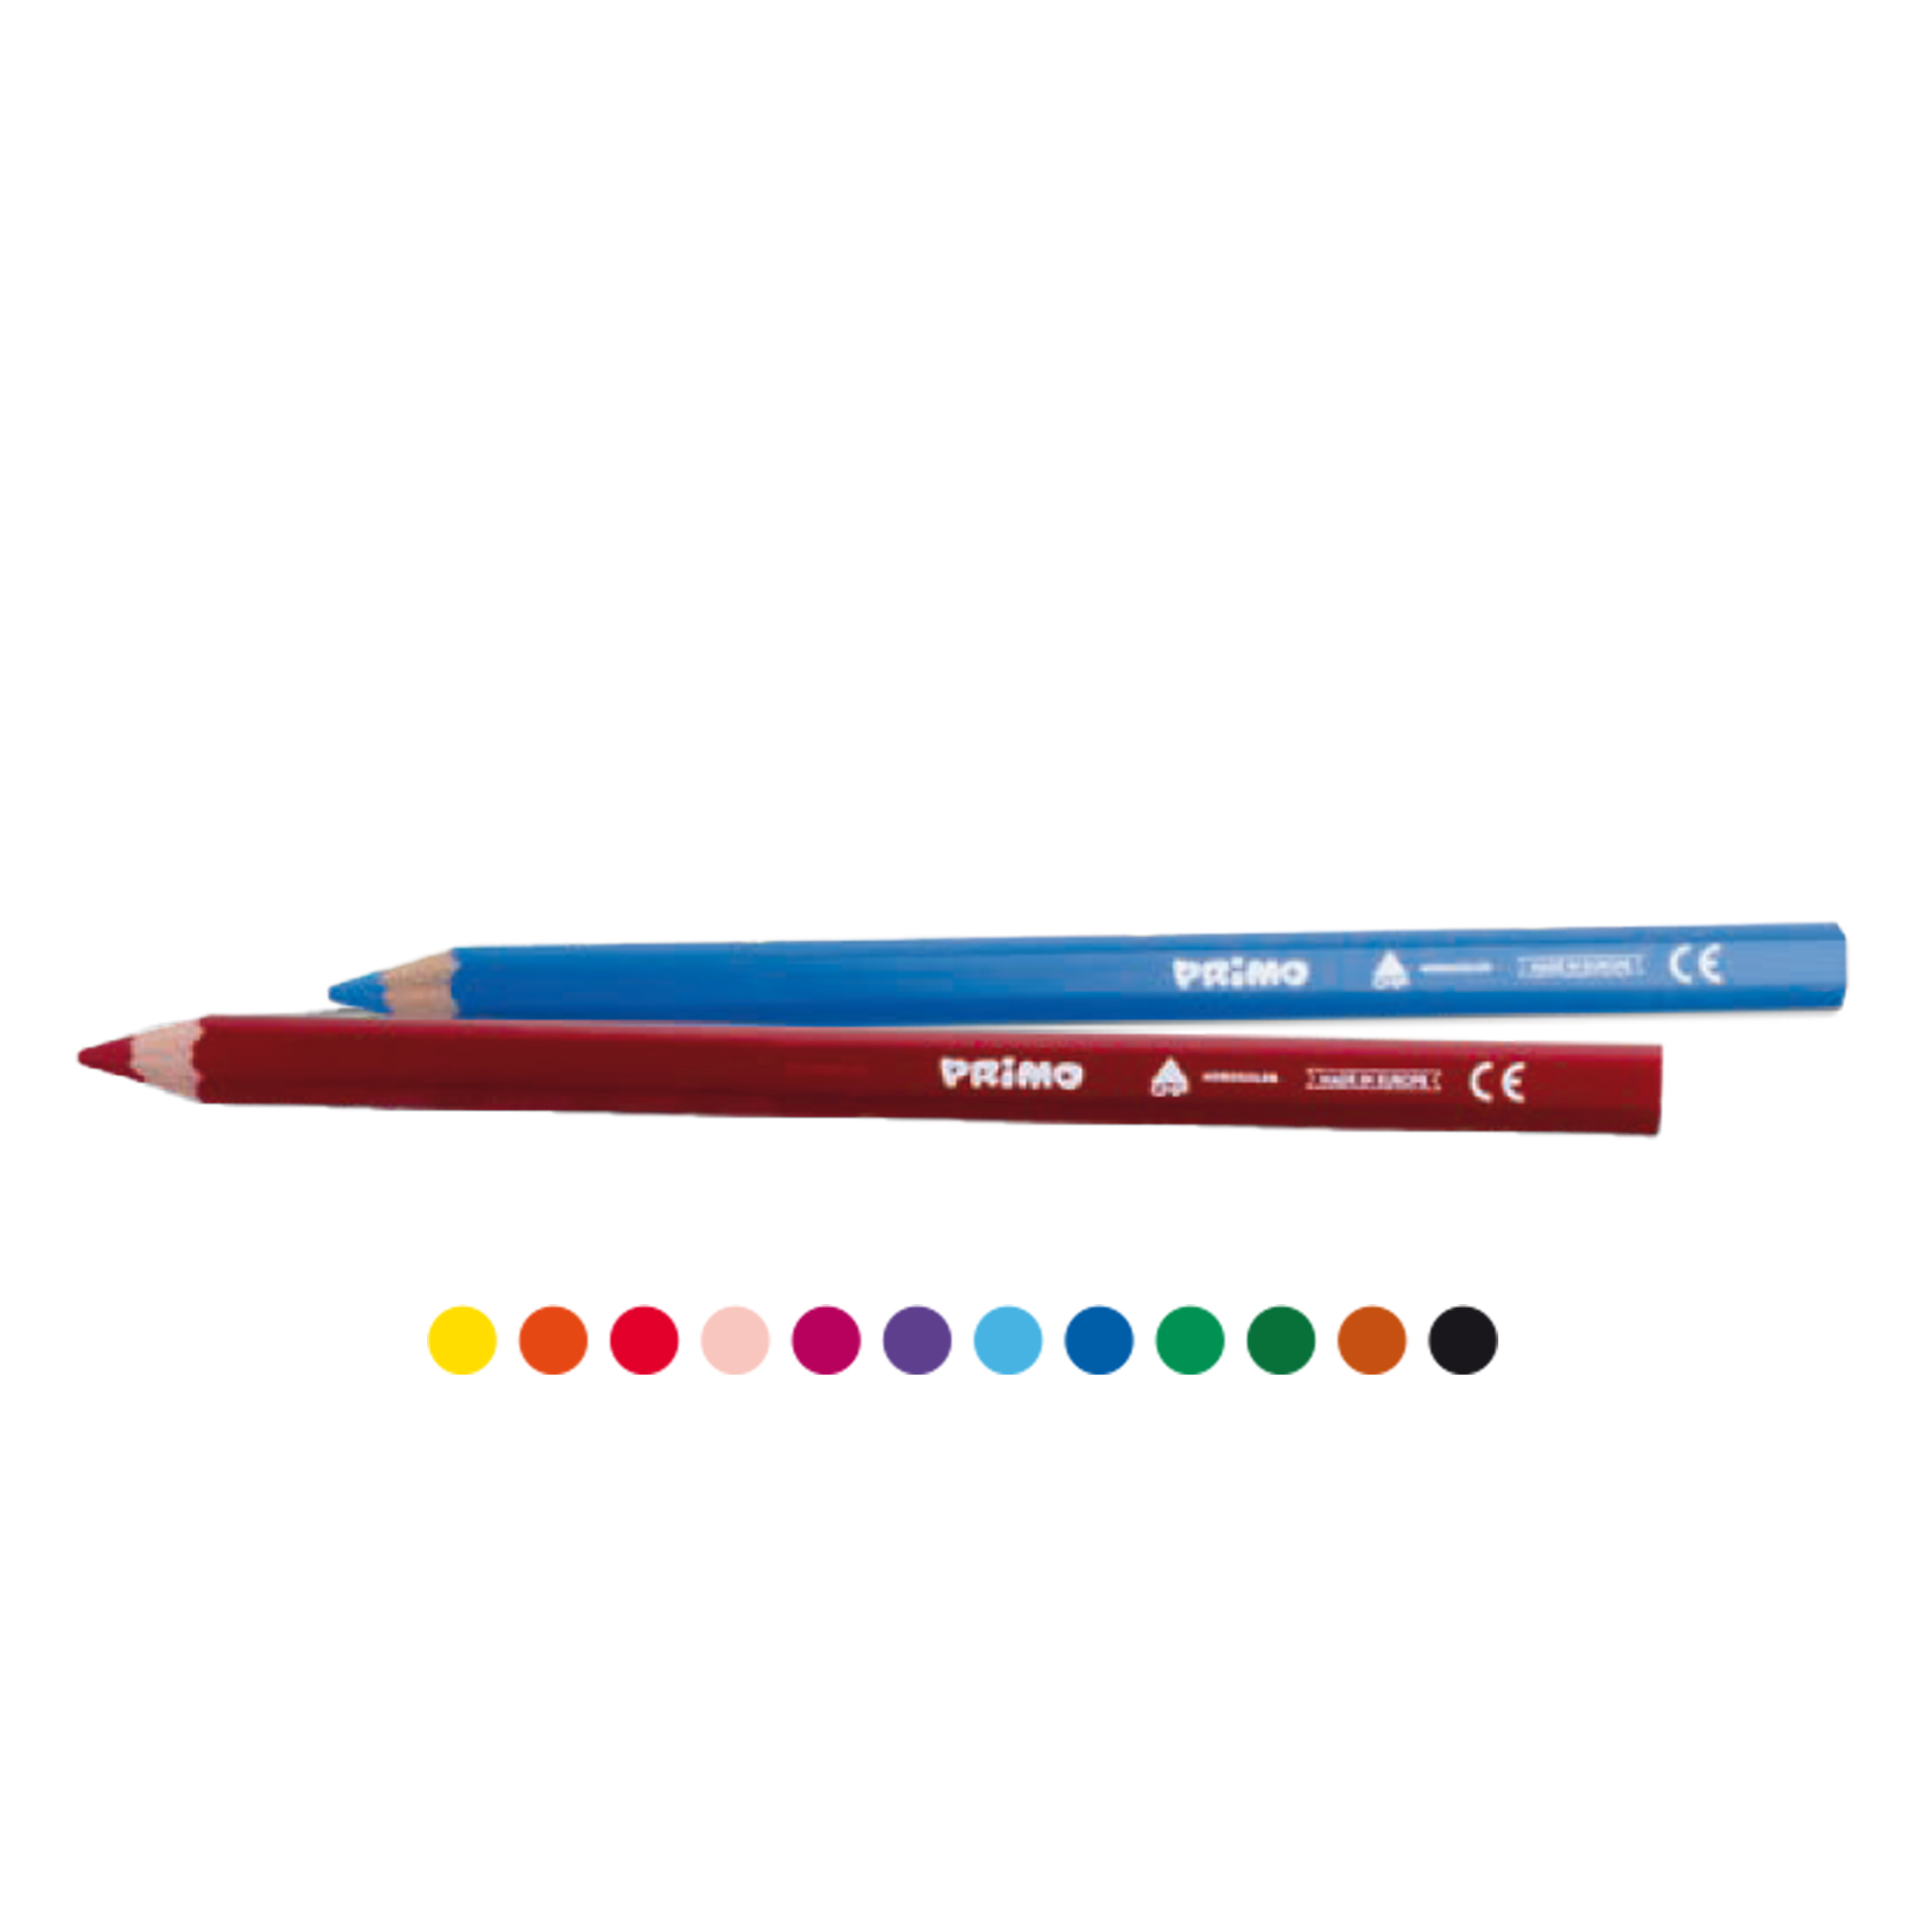 Matite colorate Jumbo - diametro mina 5,5 mm - colori assortiti - Primo - astuccio 12 matite